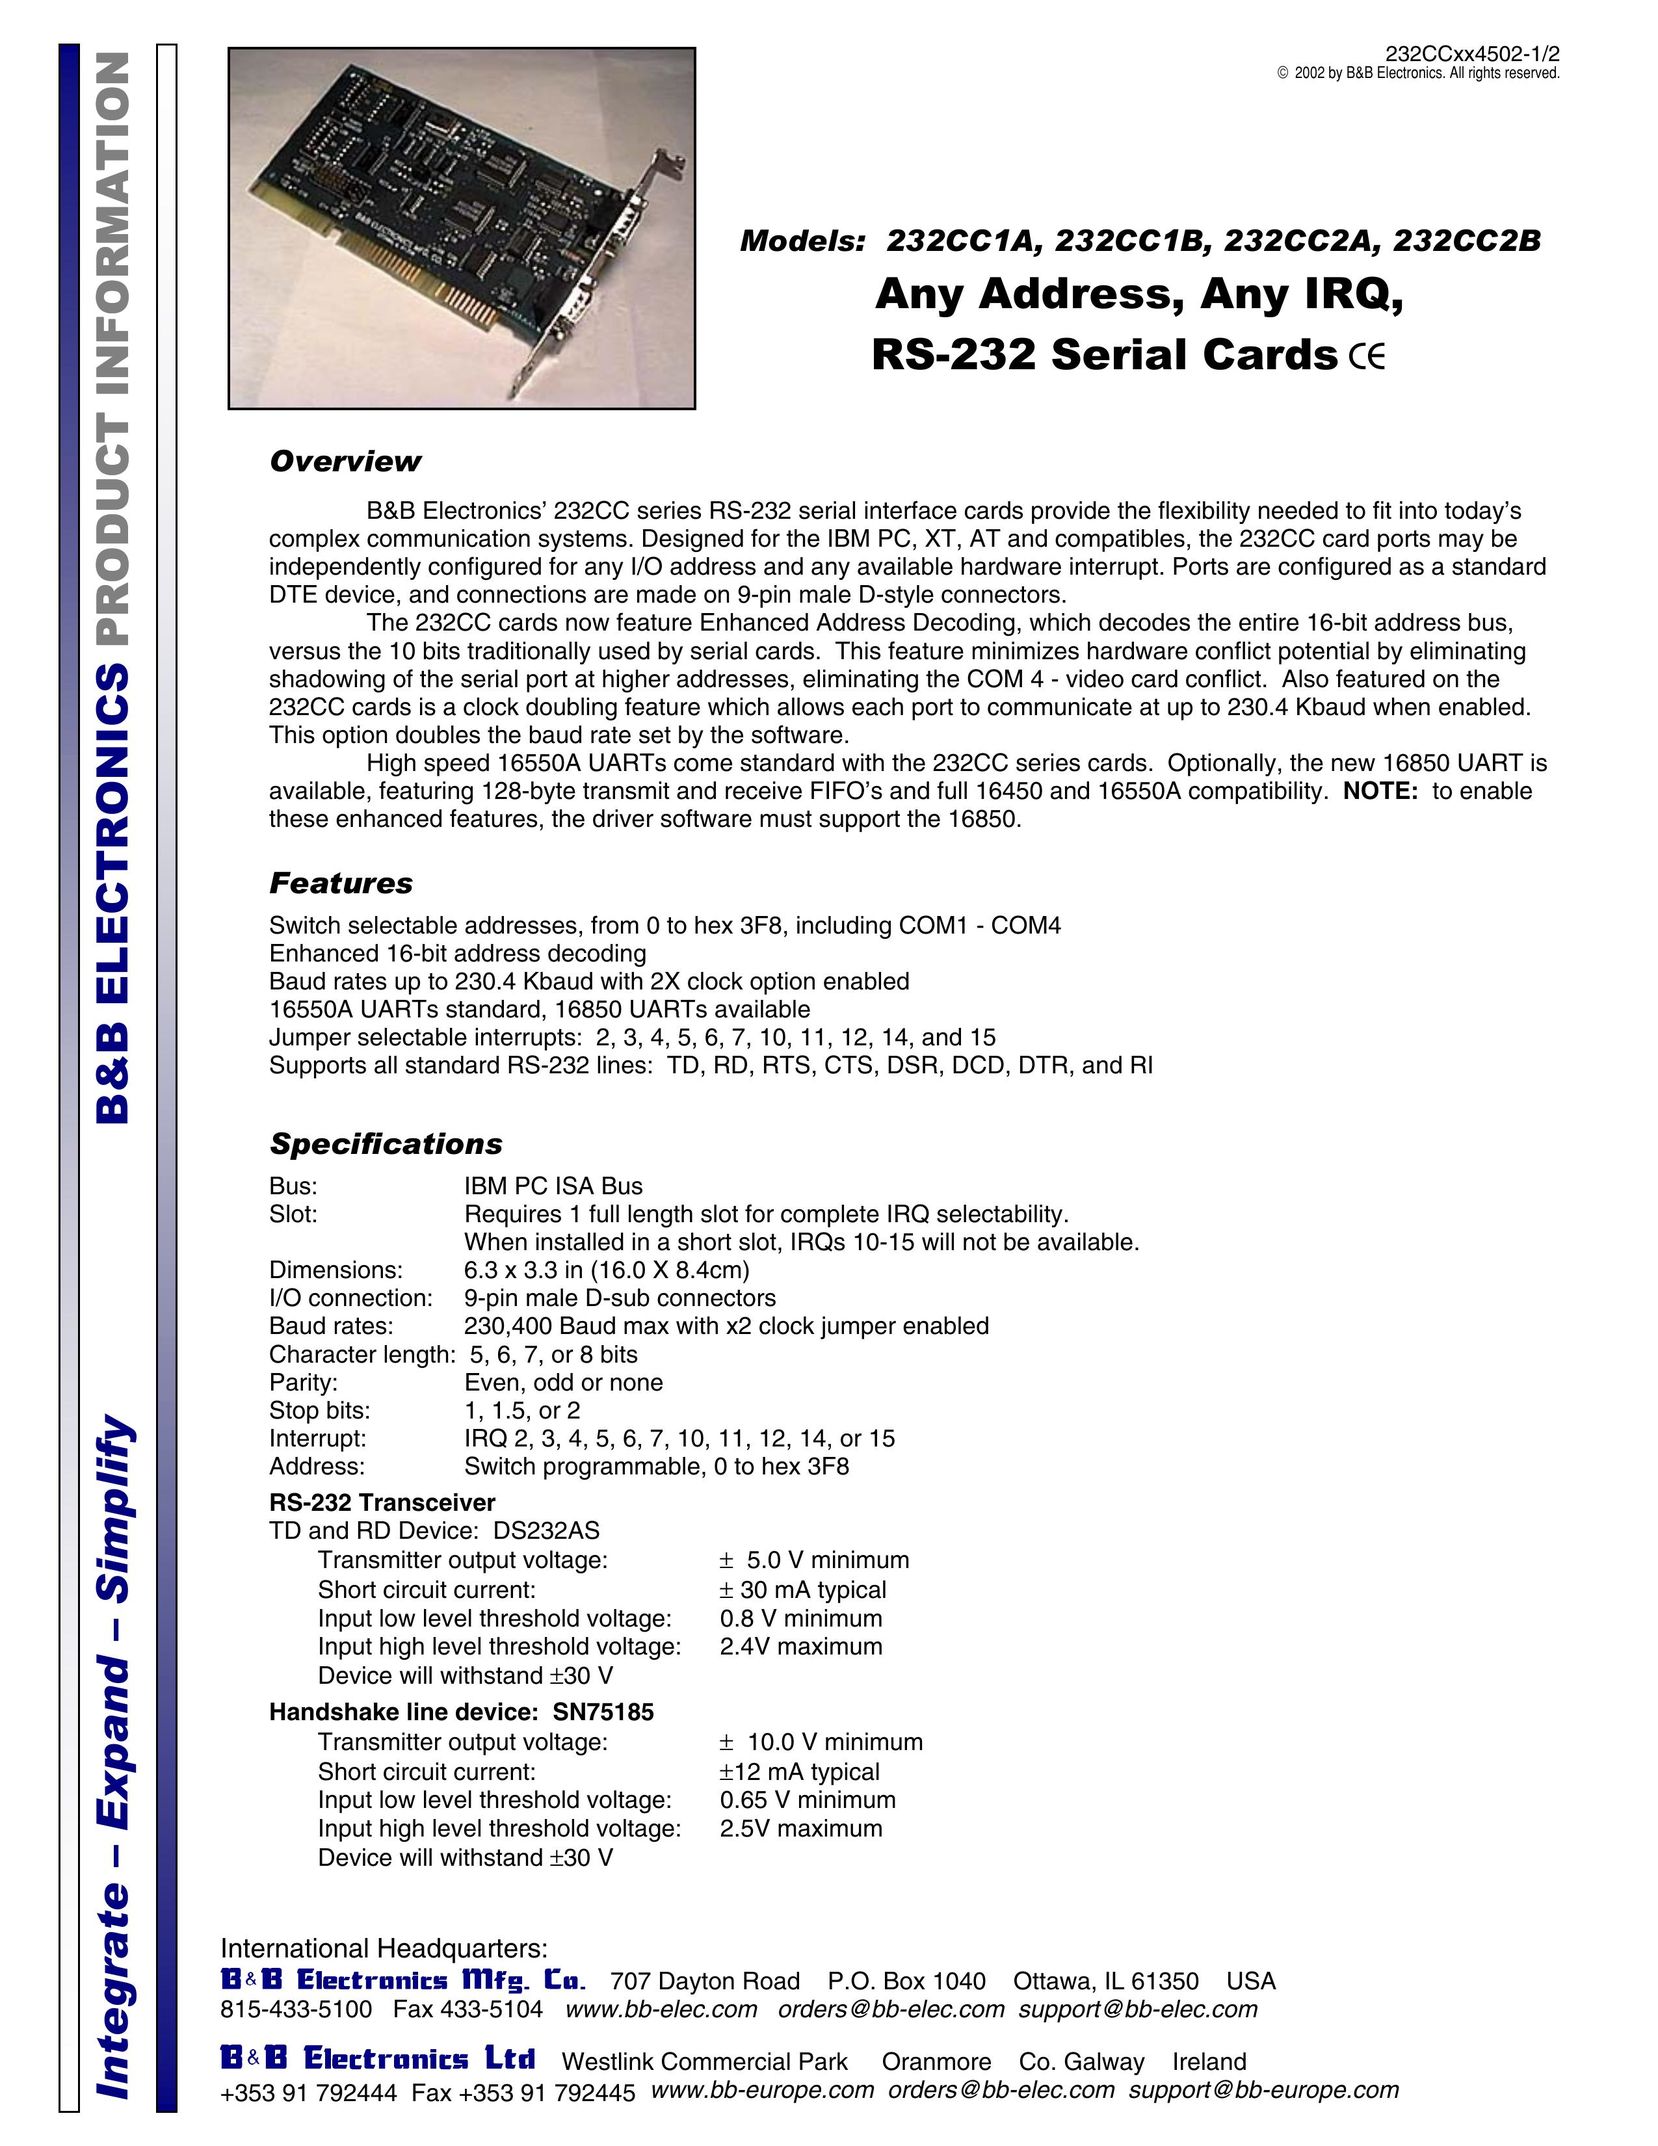 B&B Electronics 232CC2A Network Card User Manual